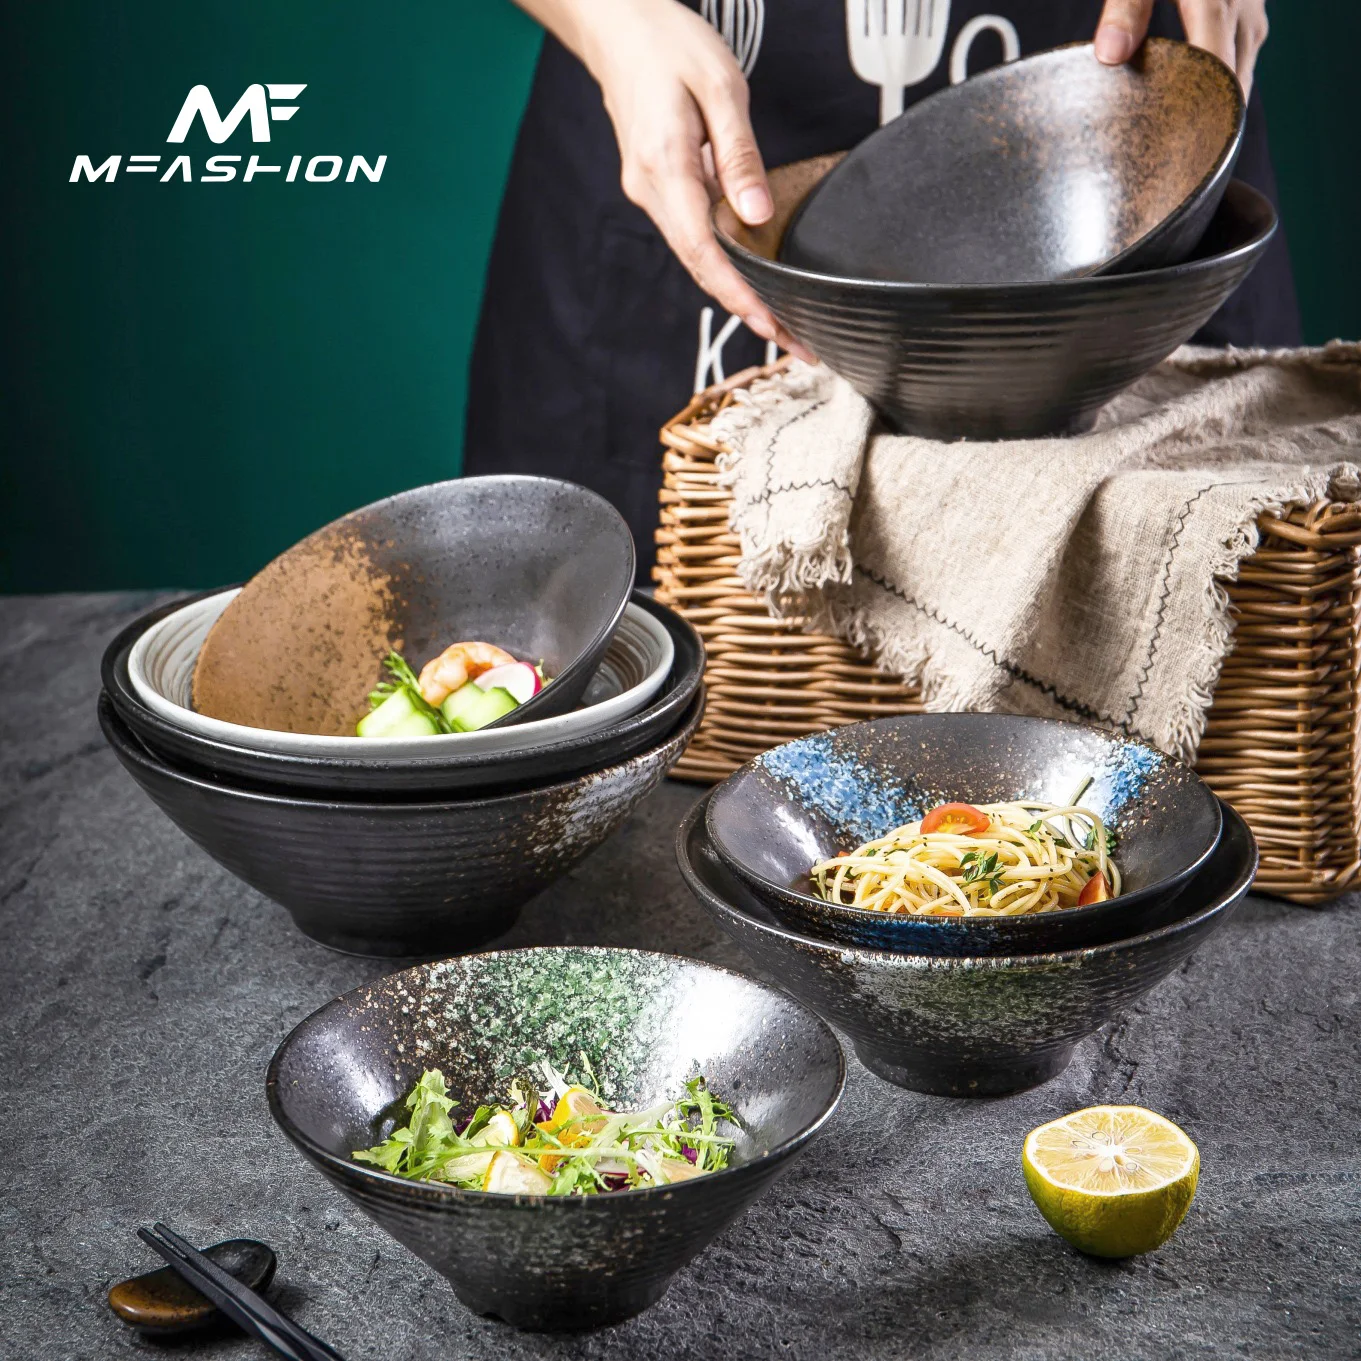 

Mfashion cheap china Japanese Retro porcelain ceramic bowls ramen salad soup mixing bowl set with Chopsticks and spoon, Colors